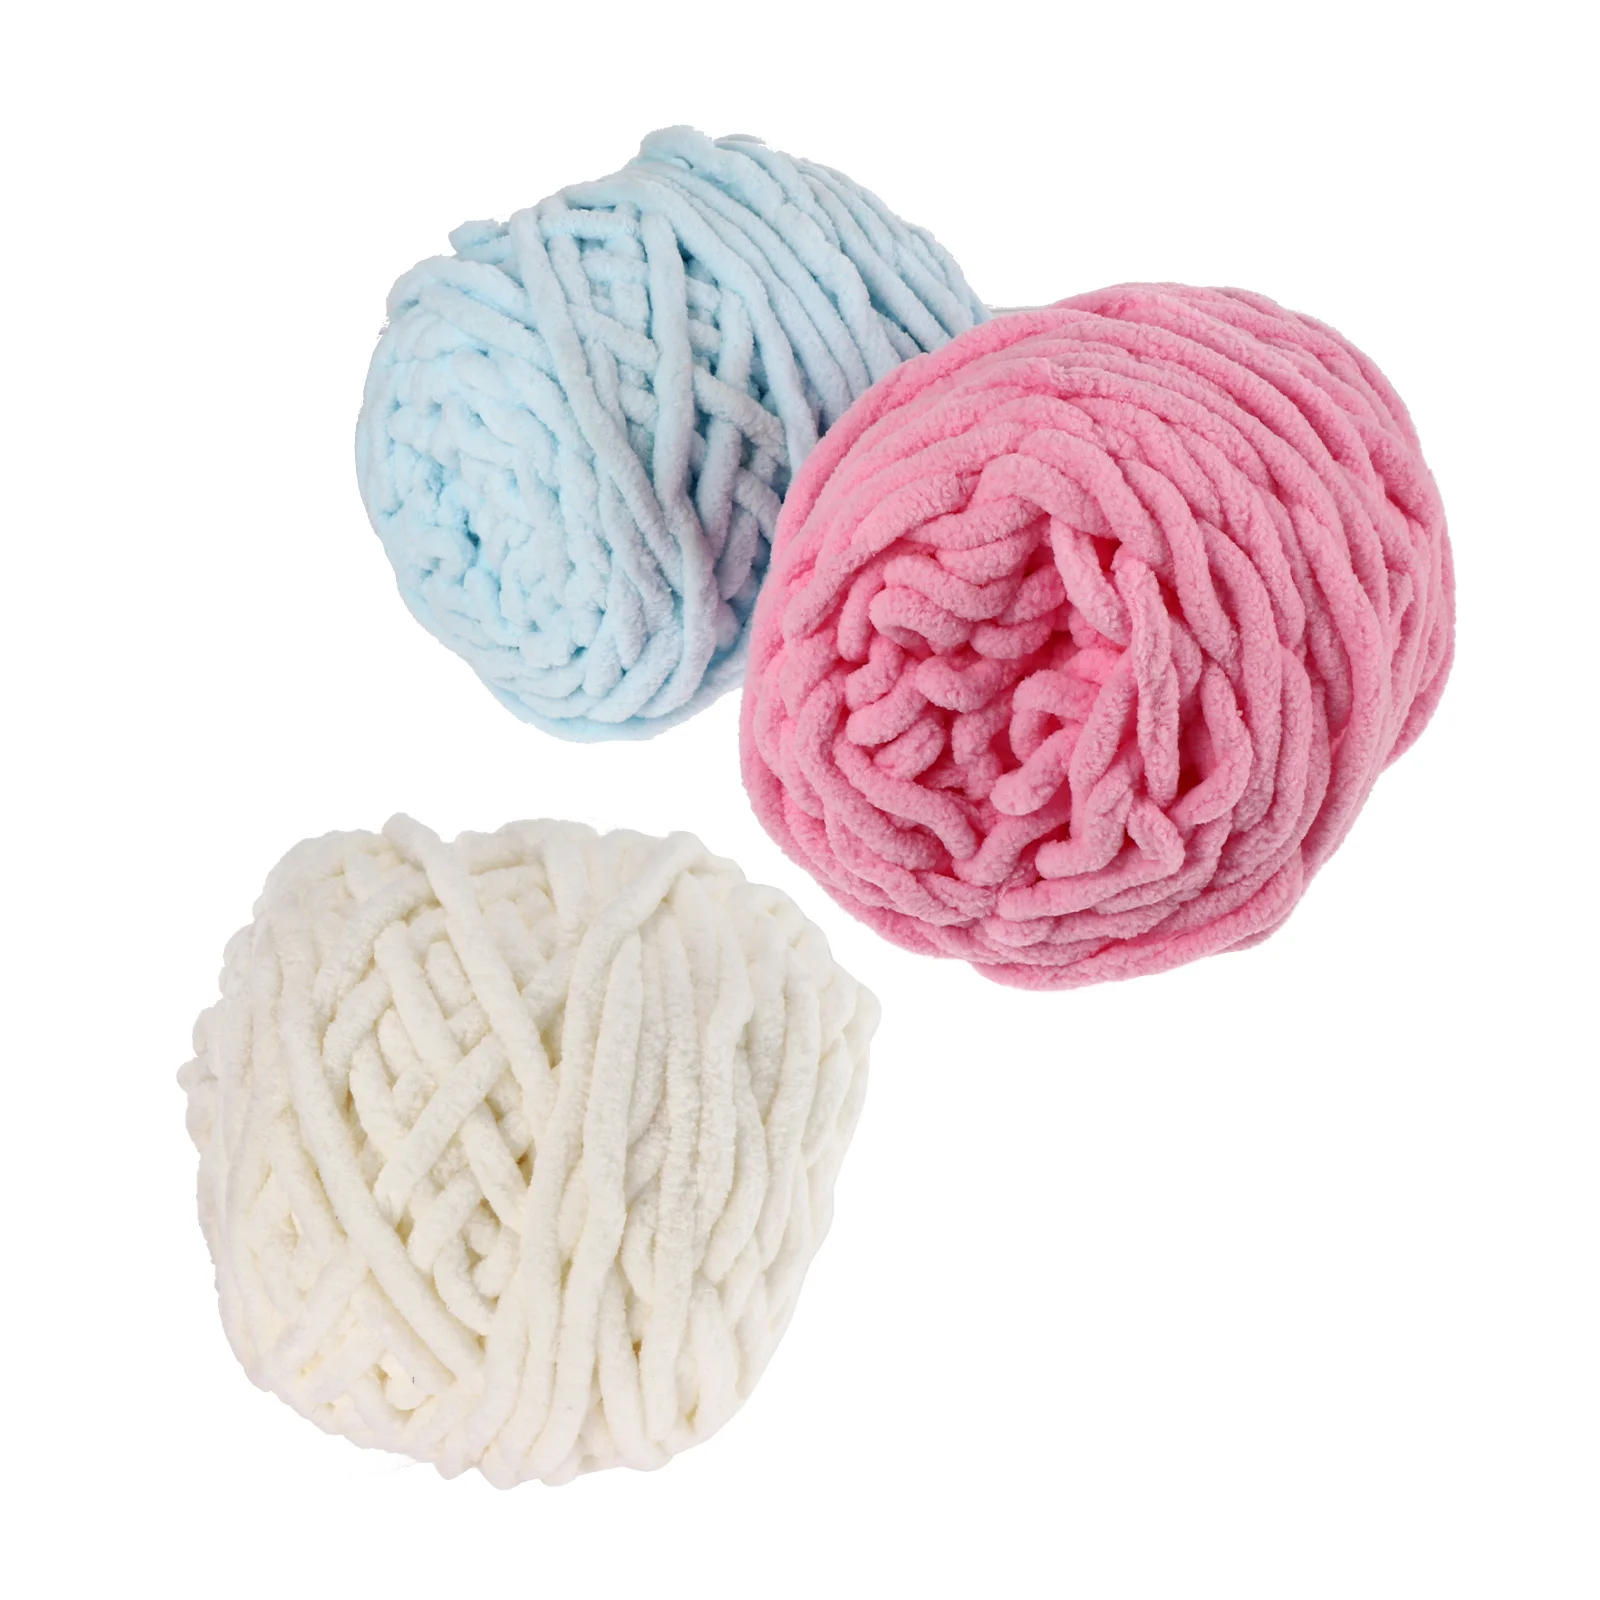 

Yarn Wool Knitting Hand Colored Woolen Acrylic Diy Cotton Crochet Bright Soft Supplies Multi Blanket Baby Glitter Nylon Blend